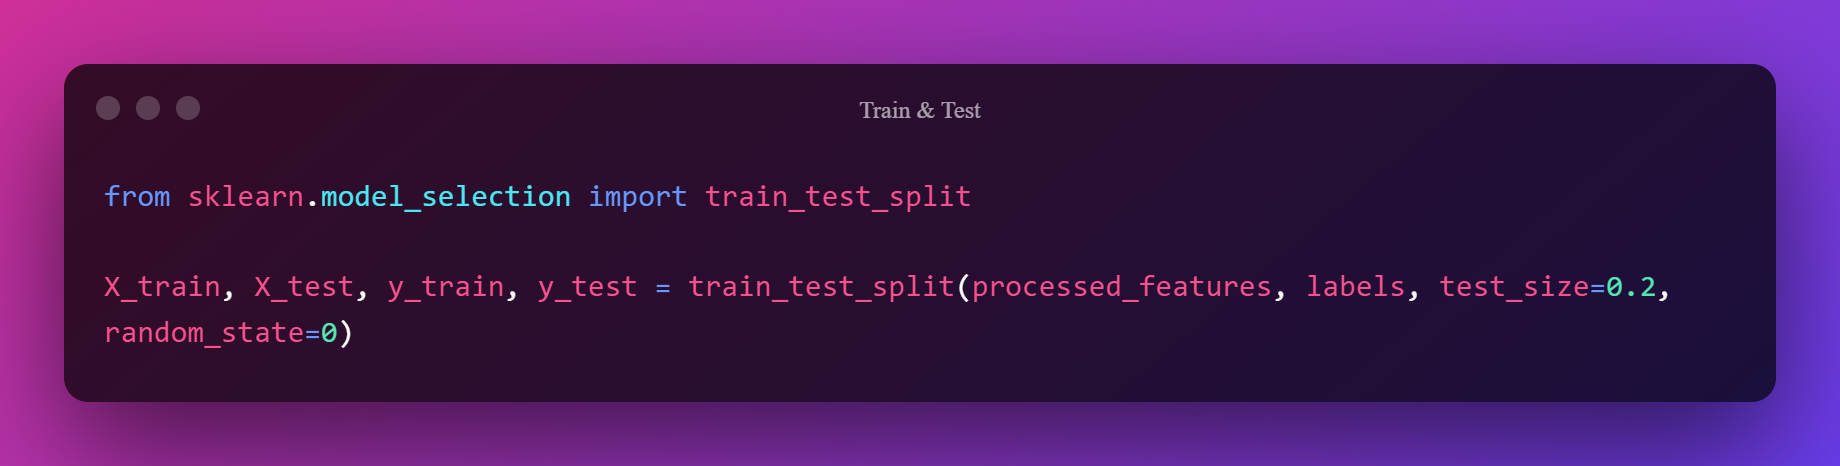 Train Test